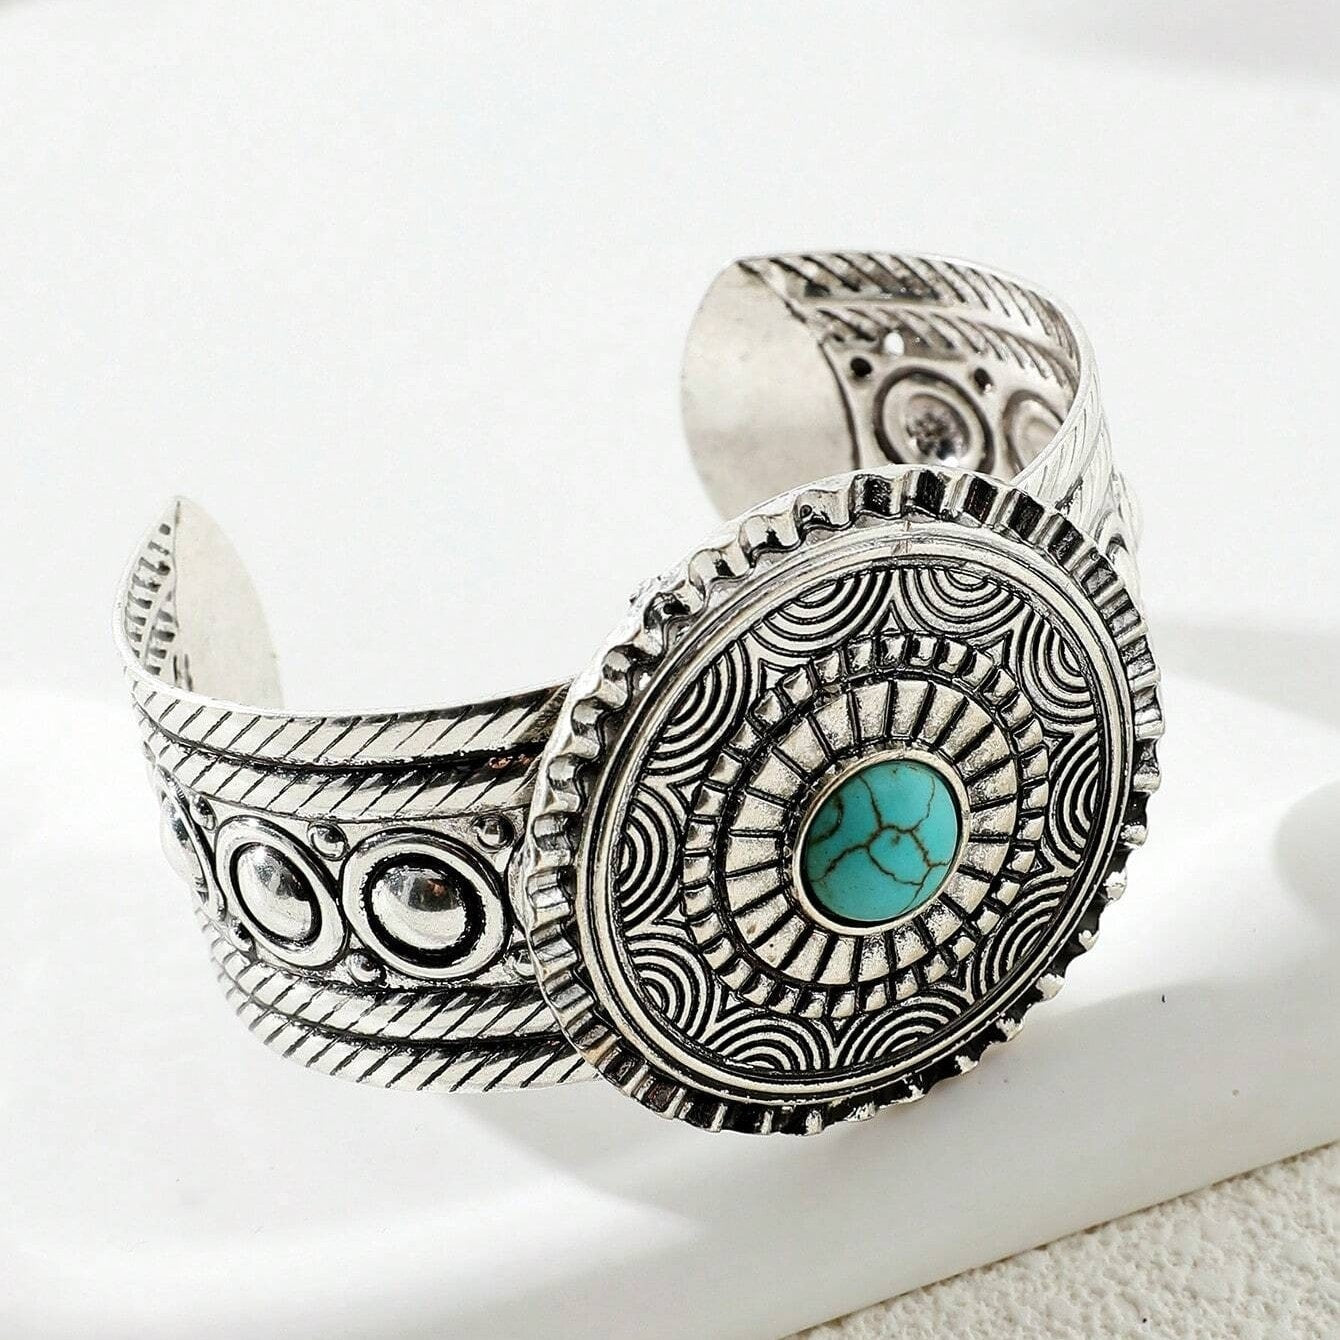 Bratara argintie, stil indian, reglabila, cu piatra turquoise, Petter C8